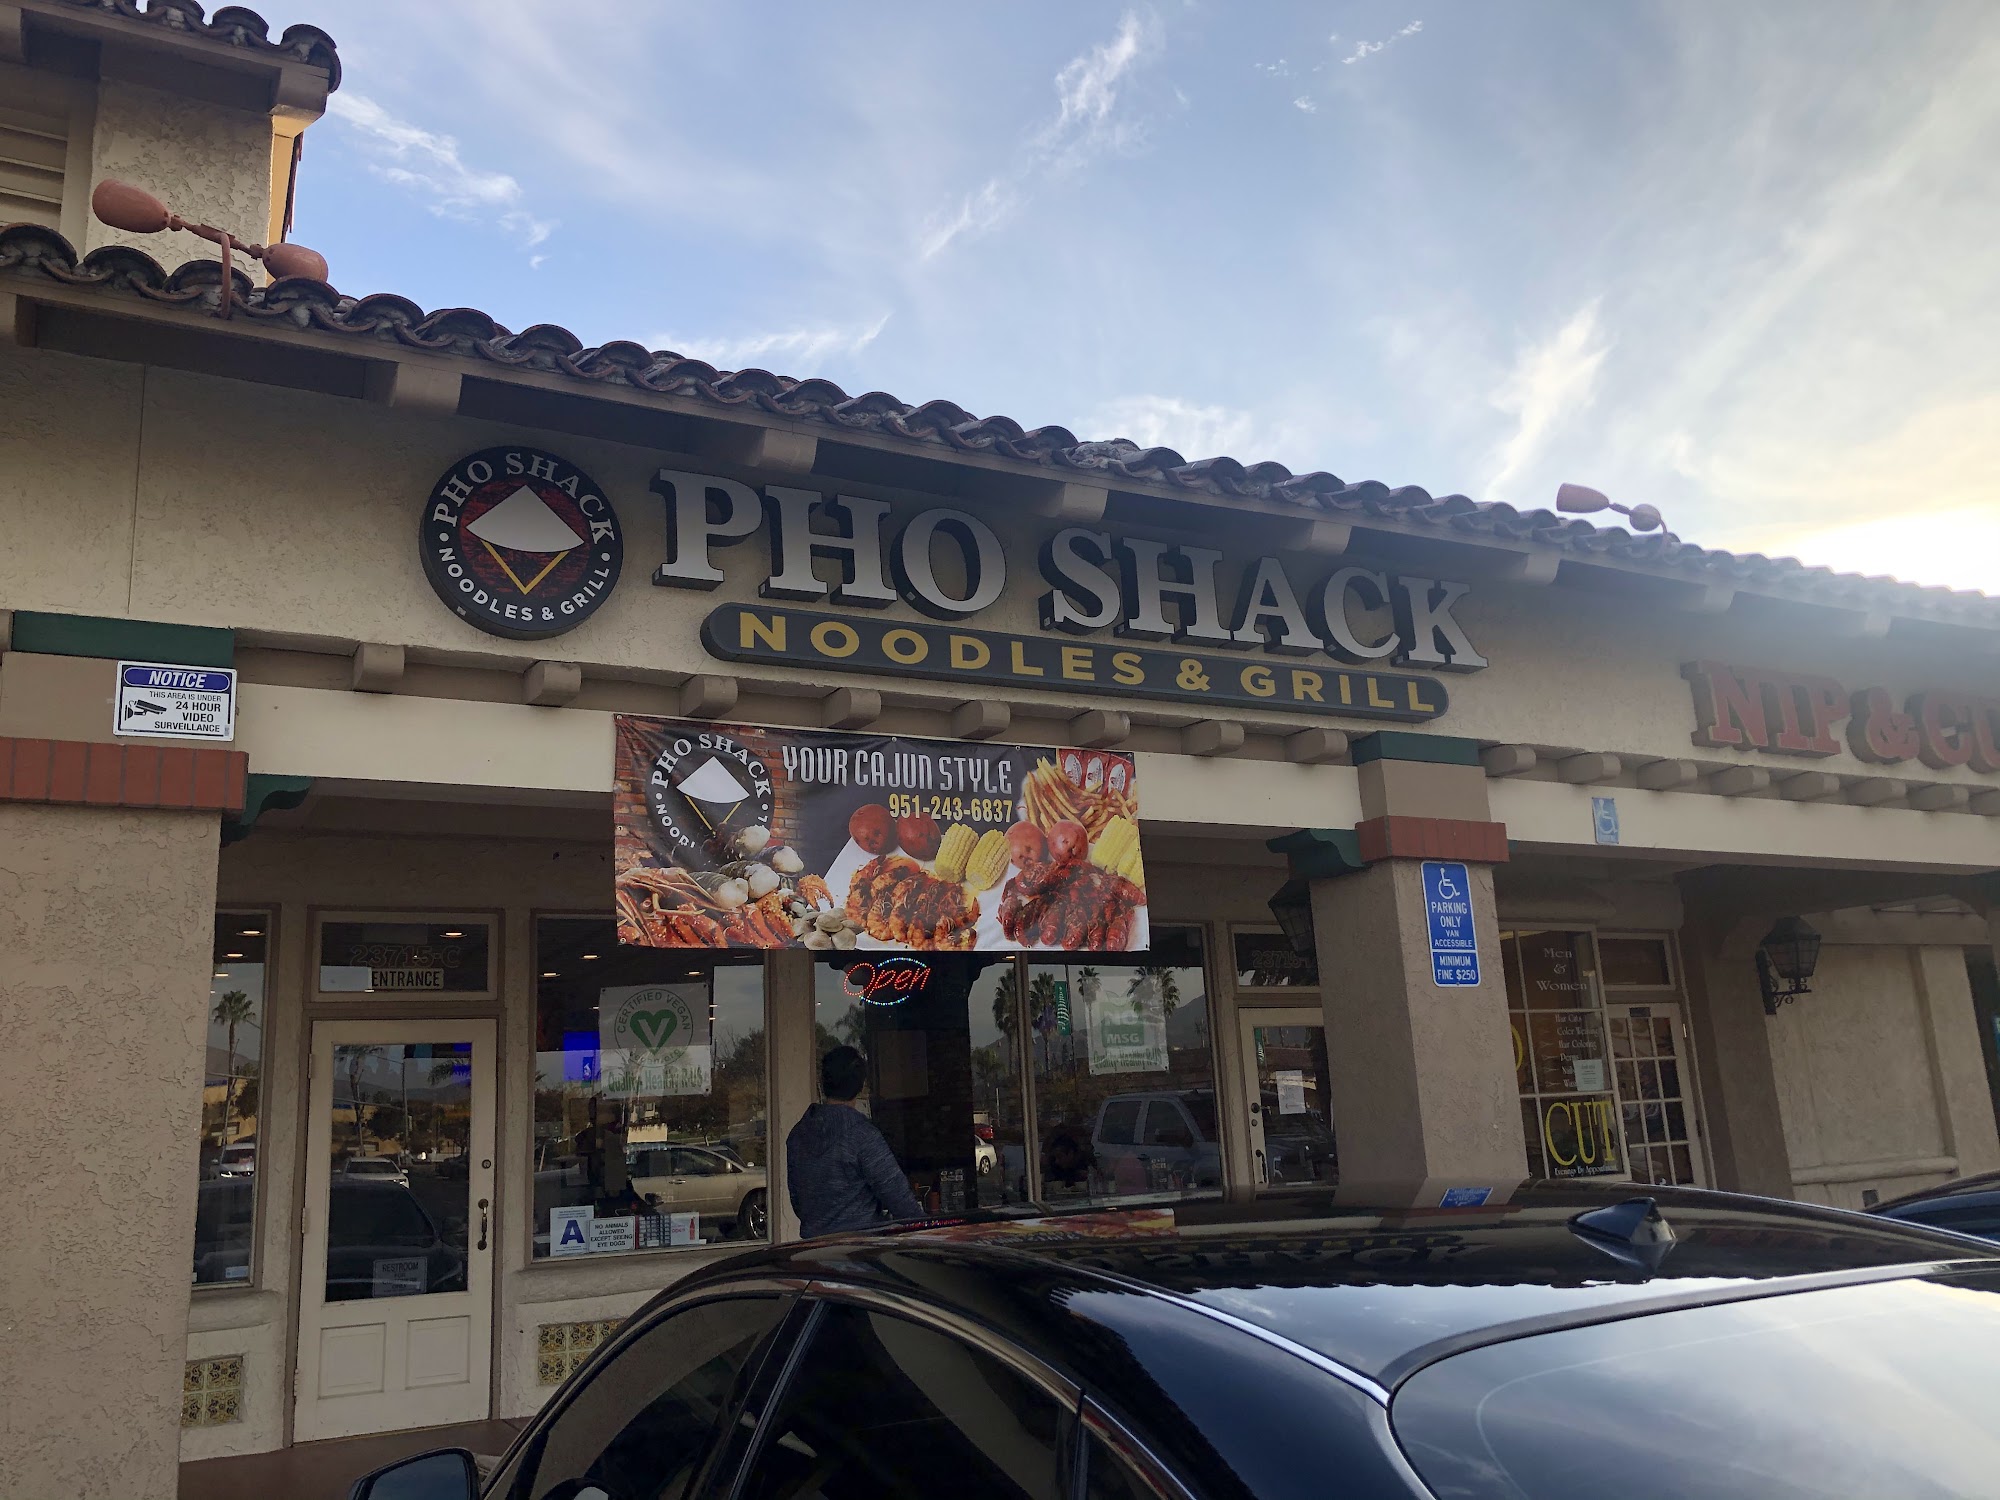 Pho Shack Noodles & Grill